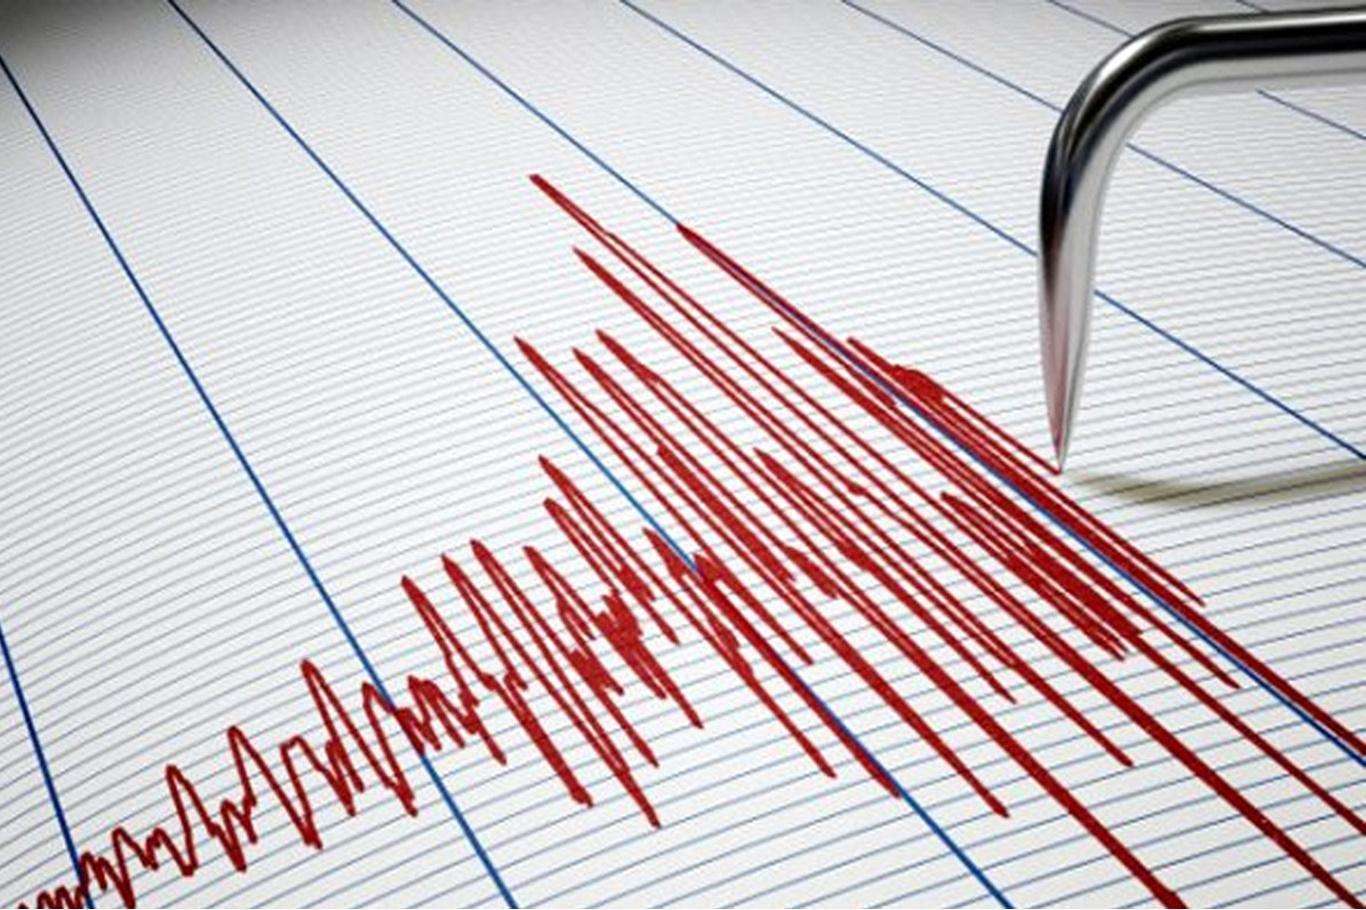 Significant earthquake of magnitude 5.5 strikes southeastern Iran